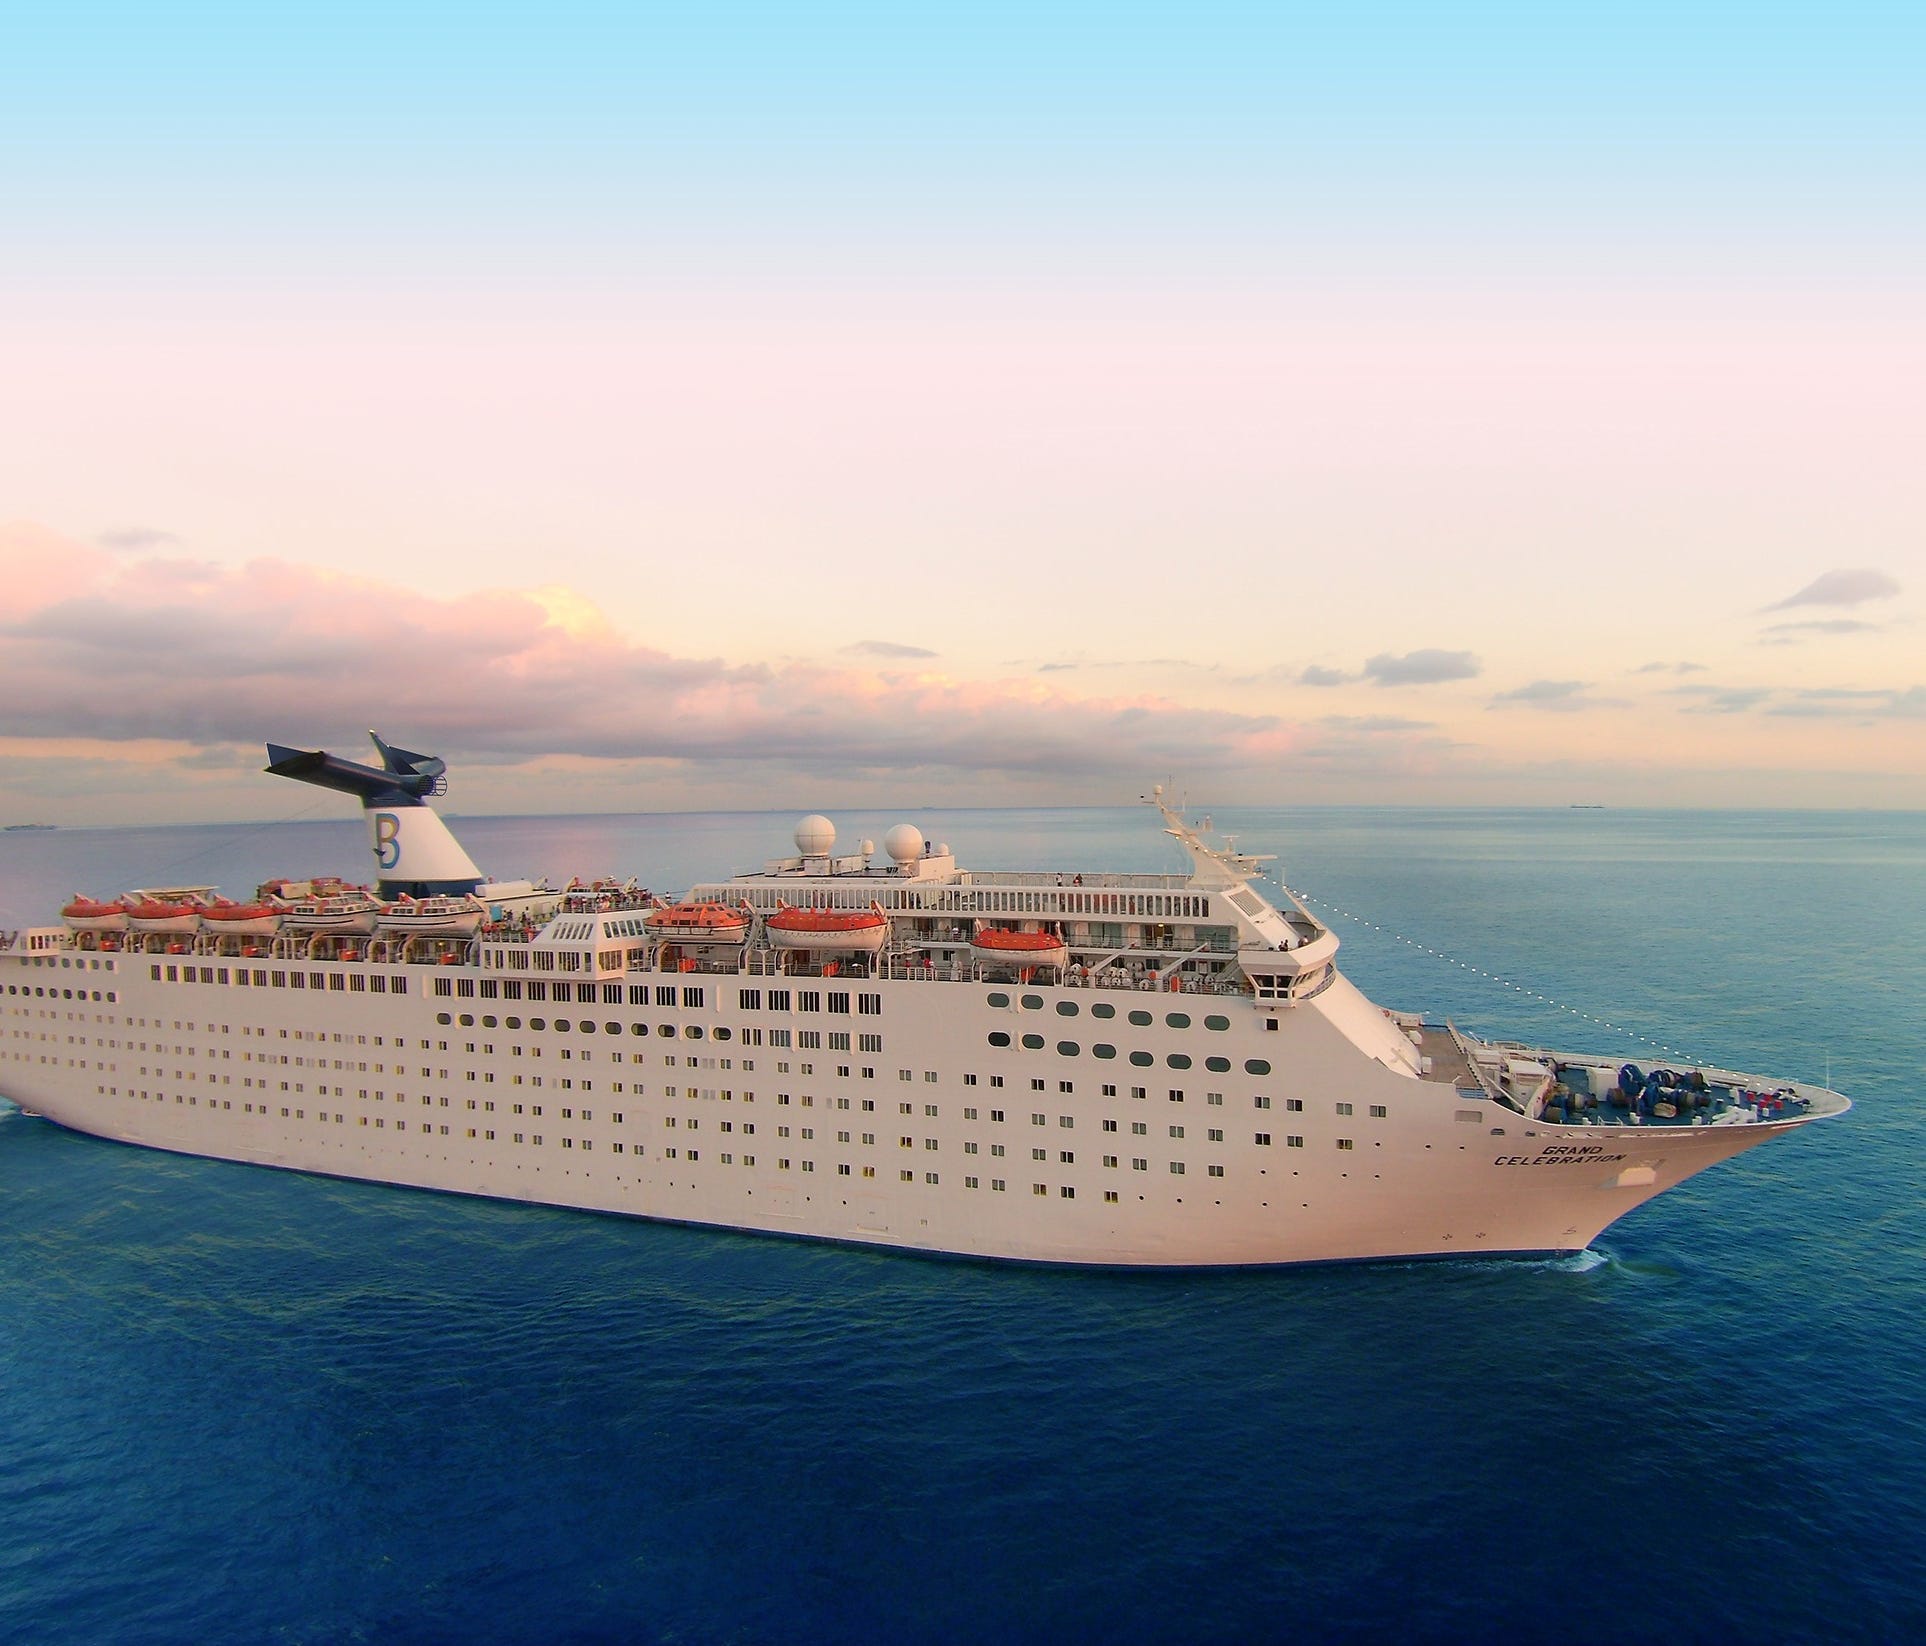 Bahamas Paradise Cruise Line's 1,900-passenger Grand Celebration sails two-night trips from West Palm Beach, Fla. to Grand Bahama Island and back.